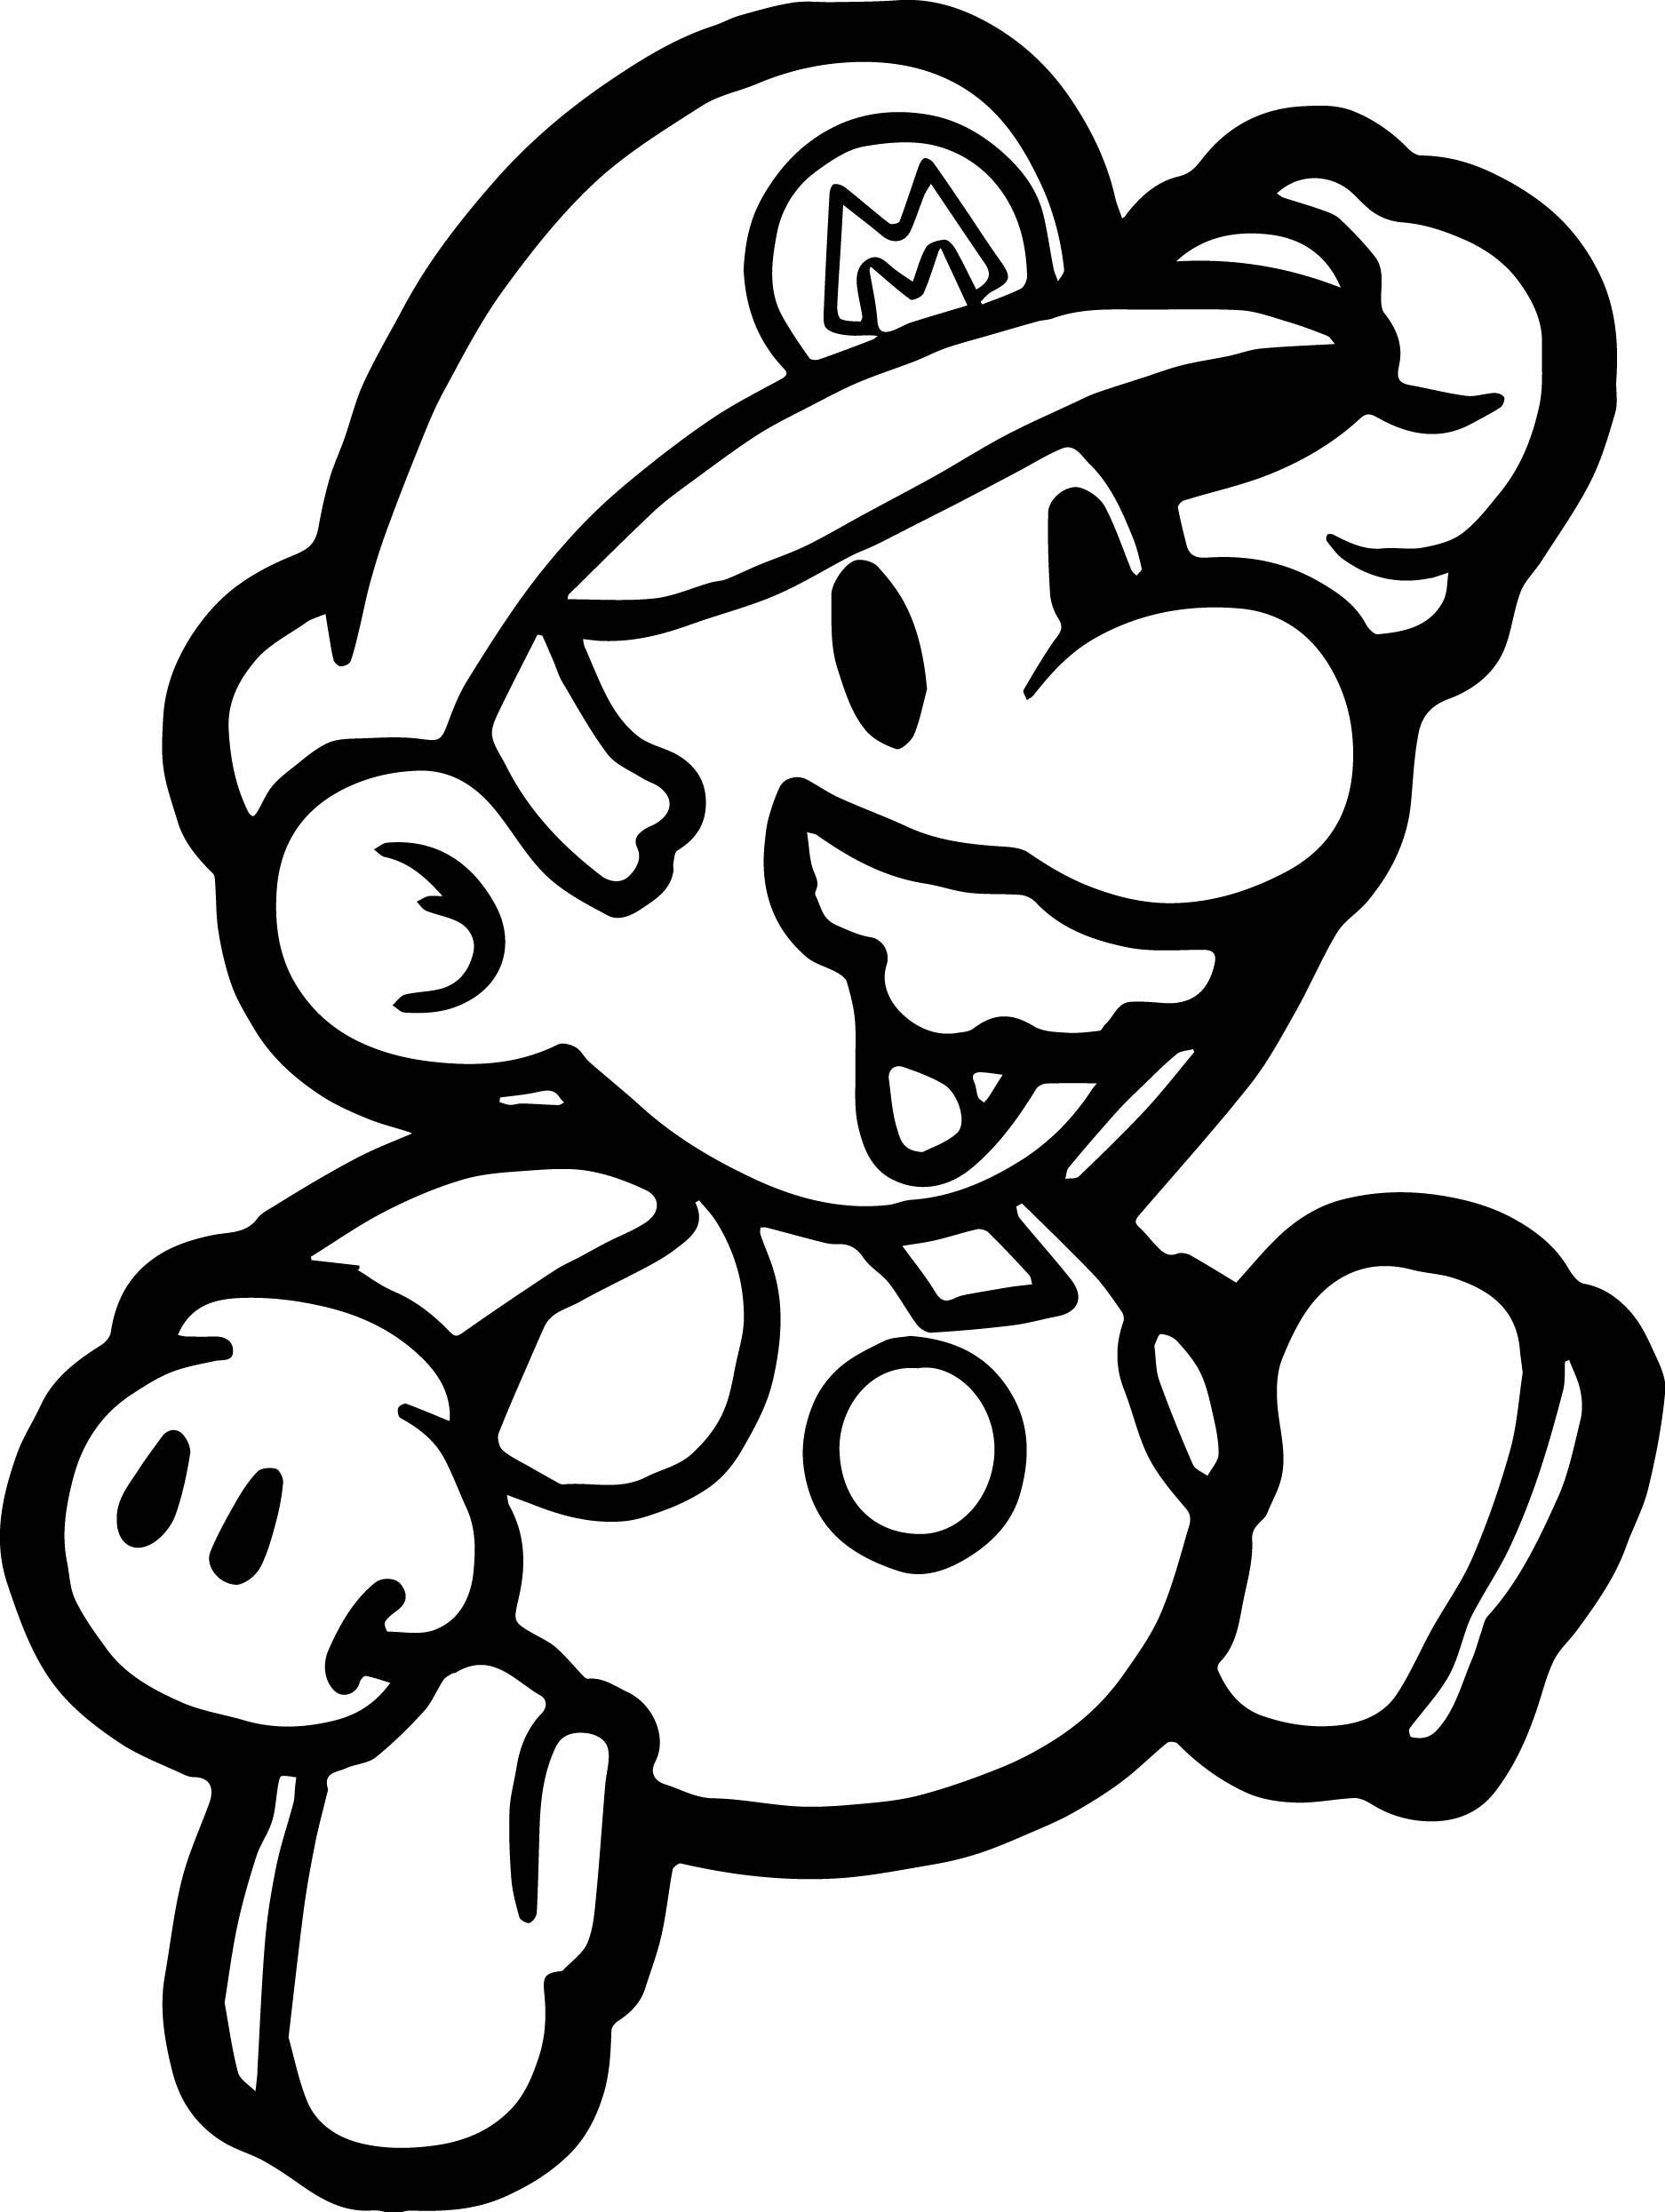 Super Mario Printable Coloring Pages